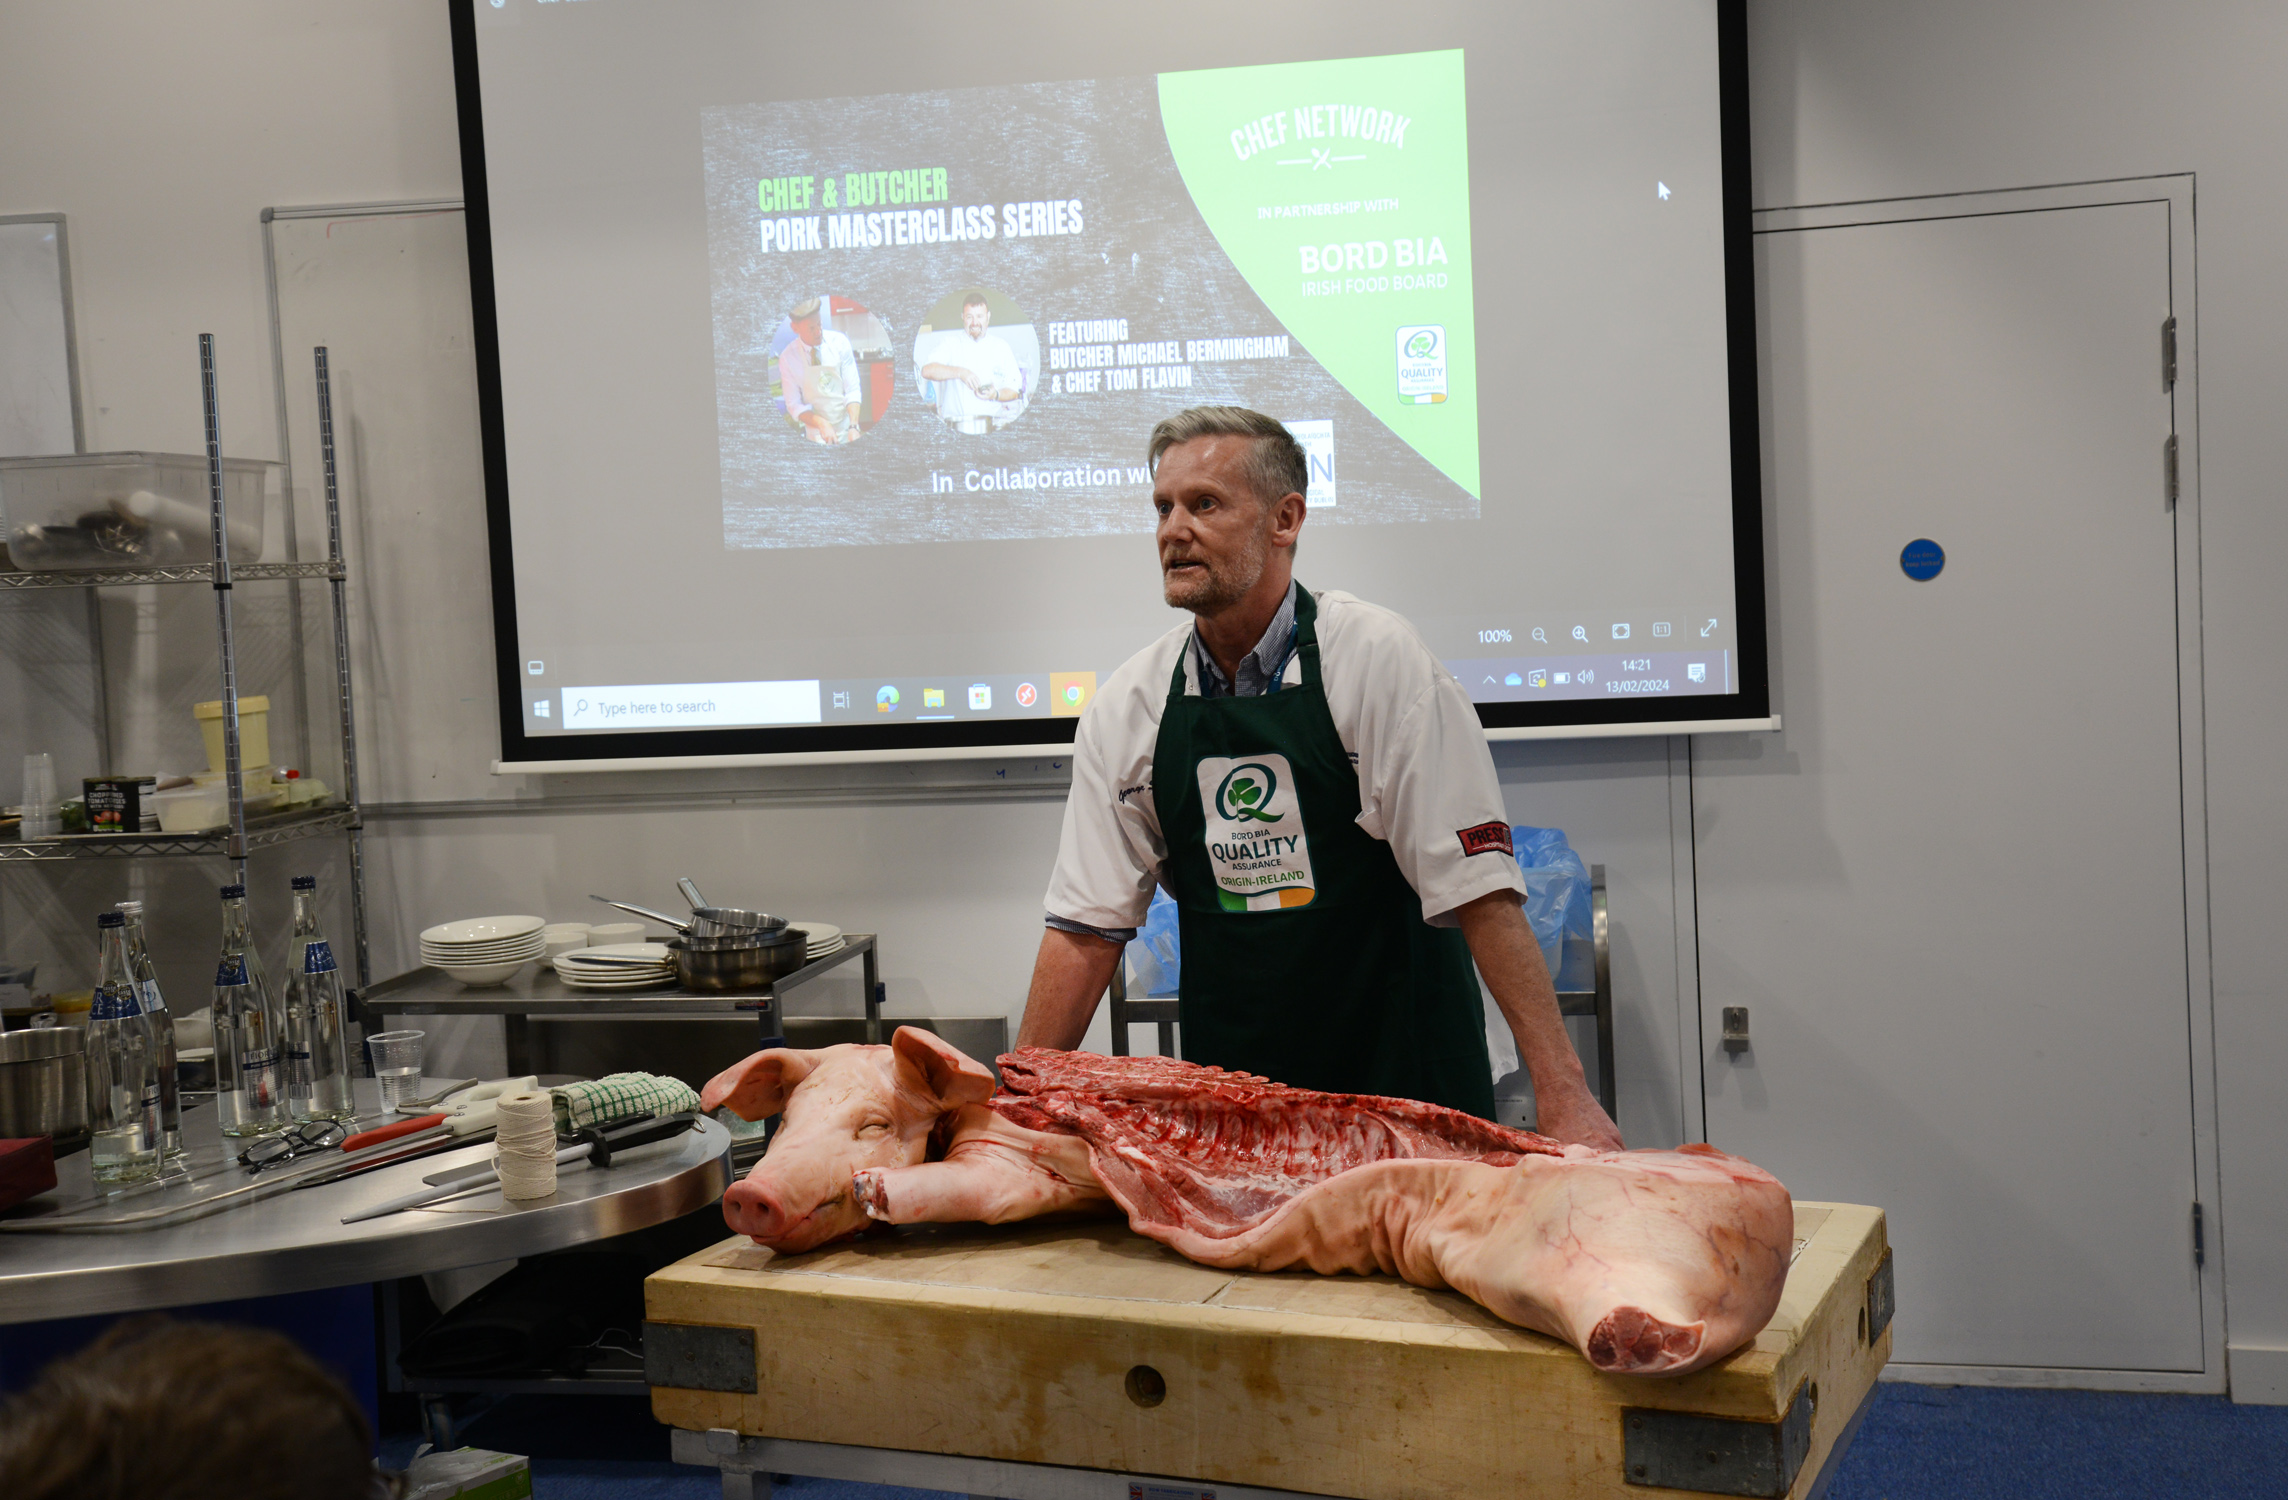 Butcher Michael Bermingham demonstrating different cuts of Pork